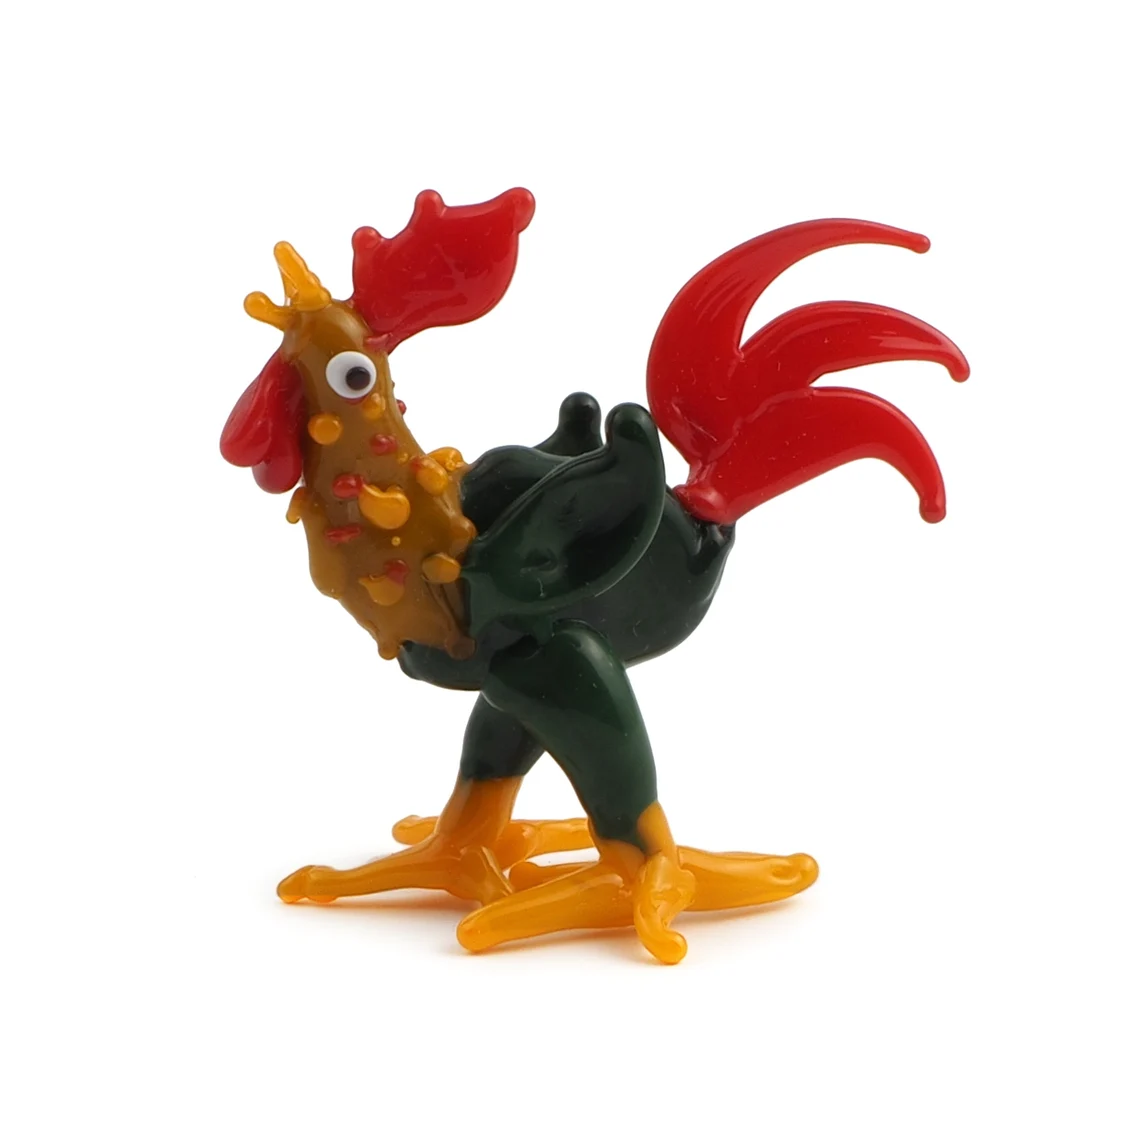 Czech lampwork glass rooster cockerel figurine ornament